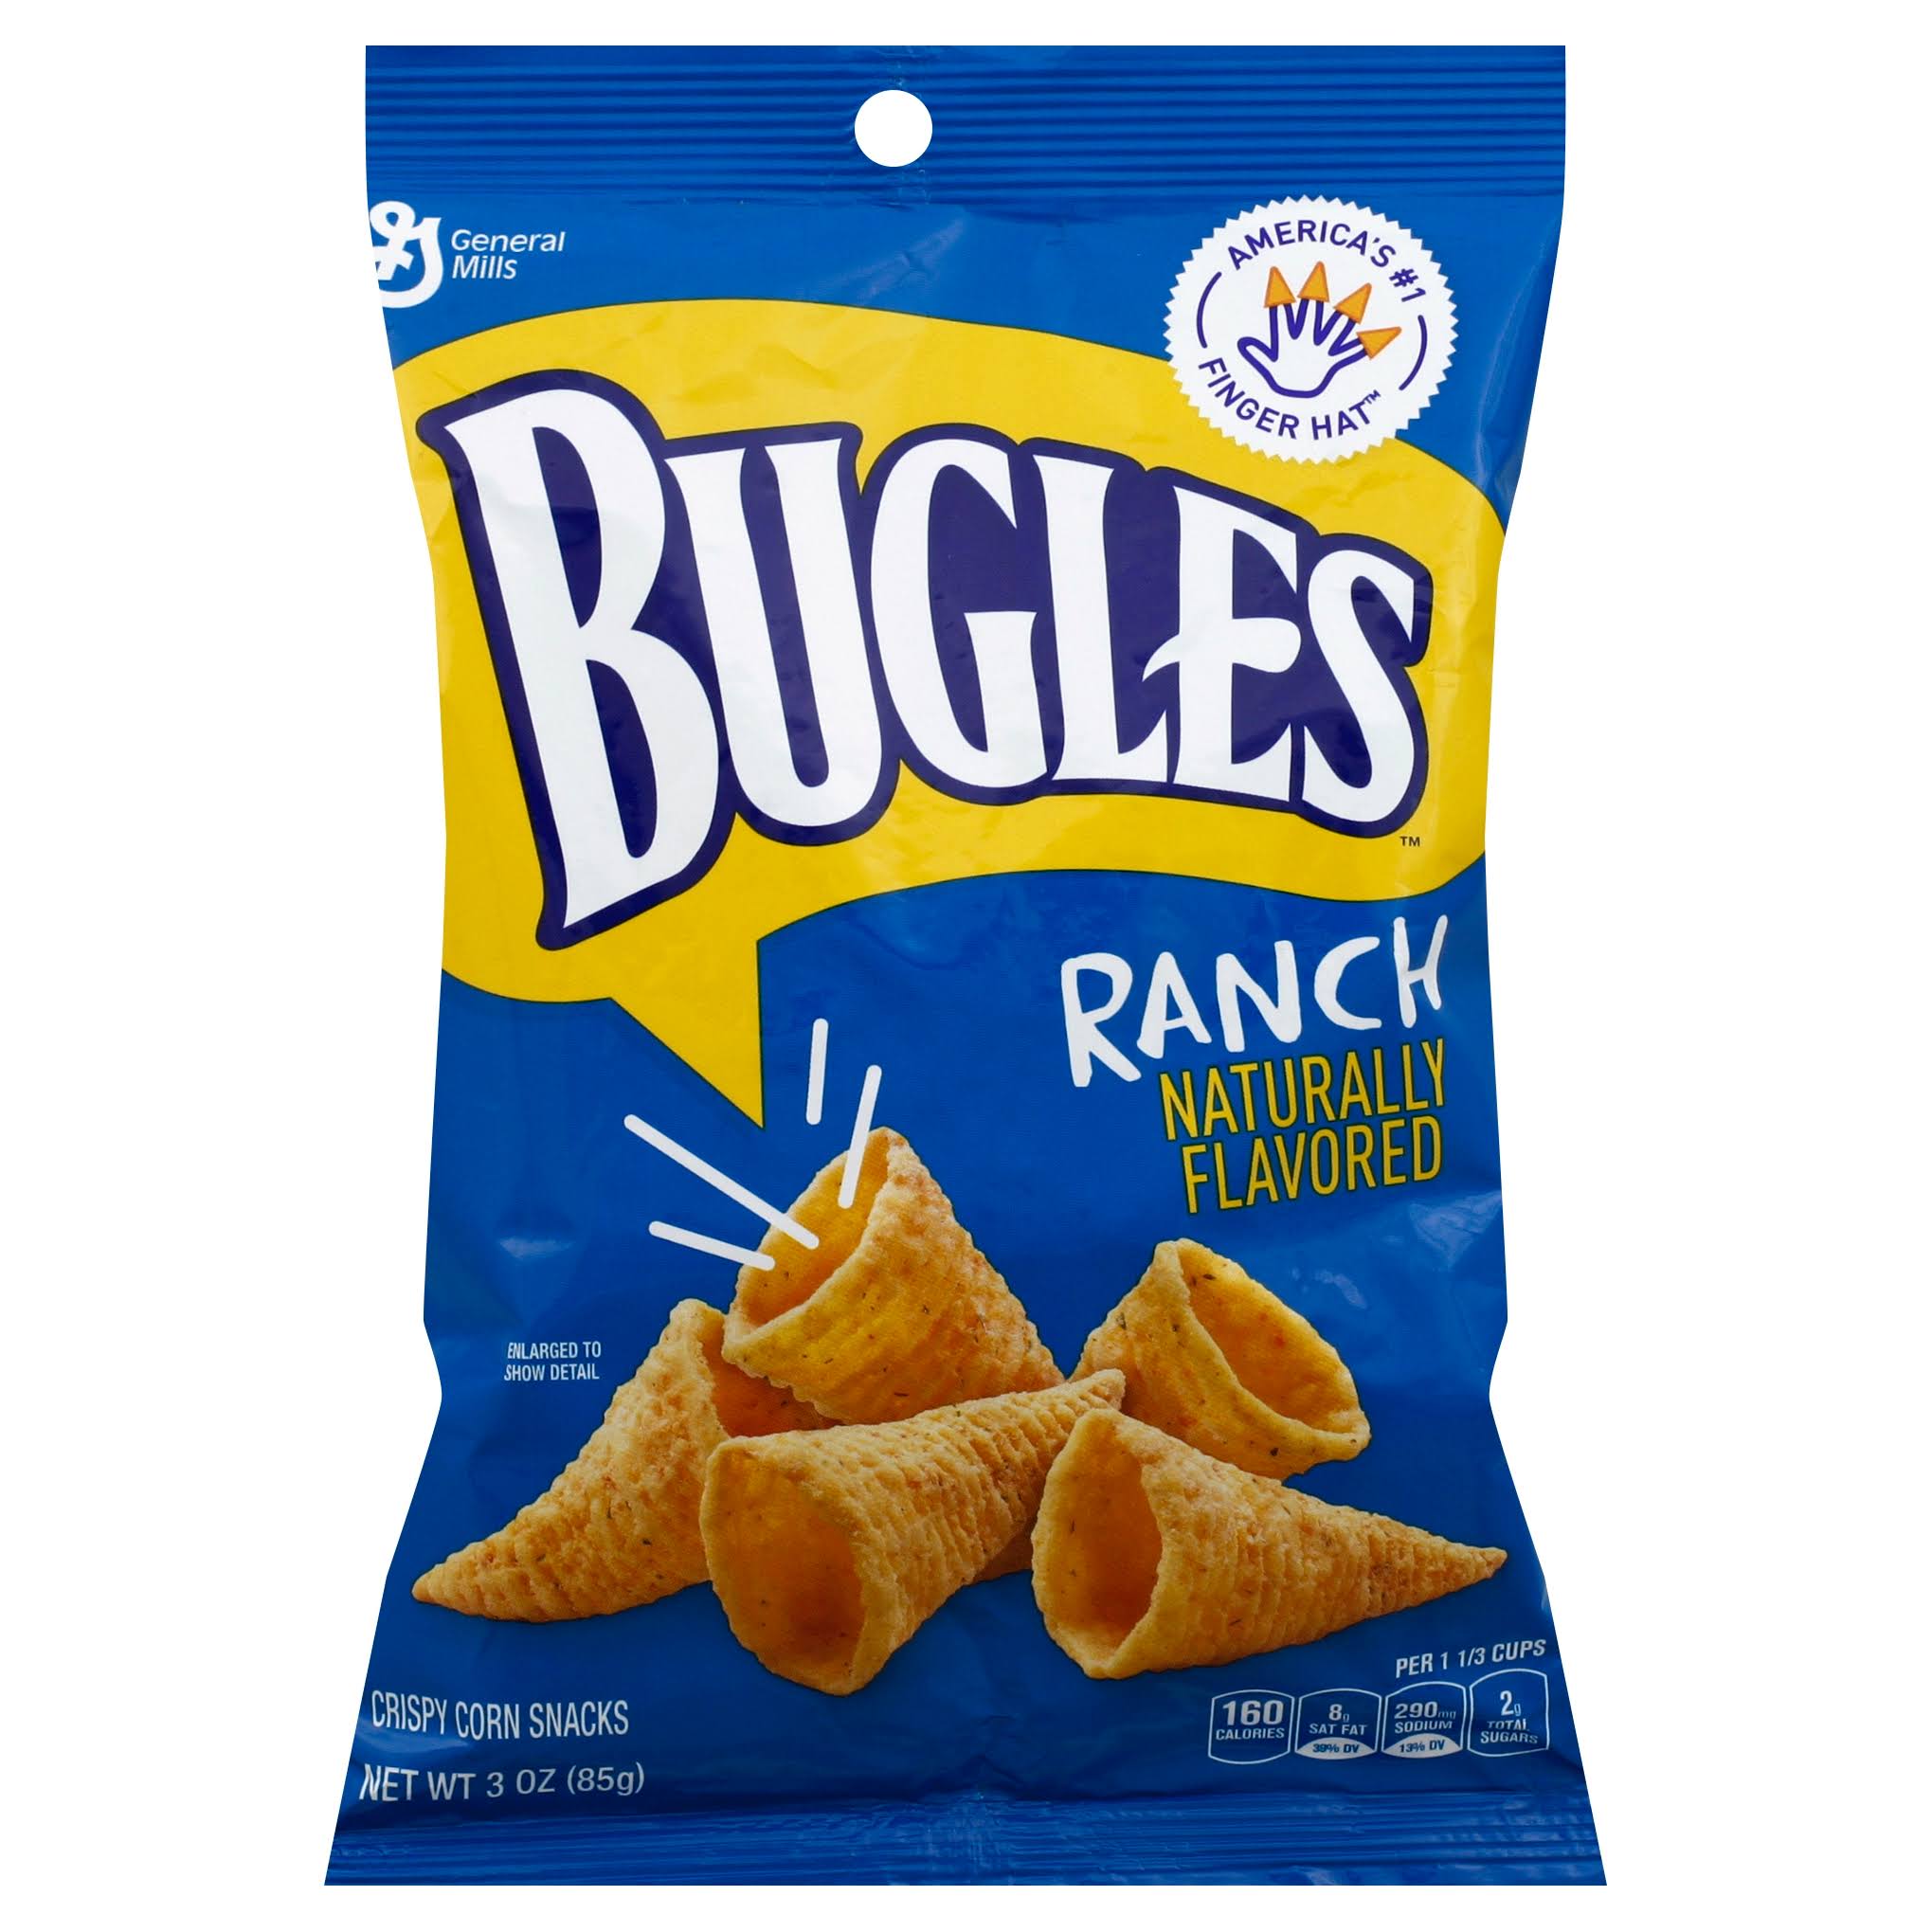 Bugles Ranch Naturally Flavored Crispy Corn Snacks - 3oz, 6pk